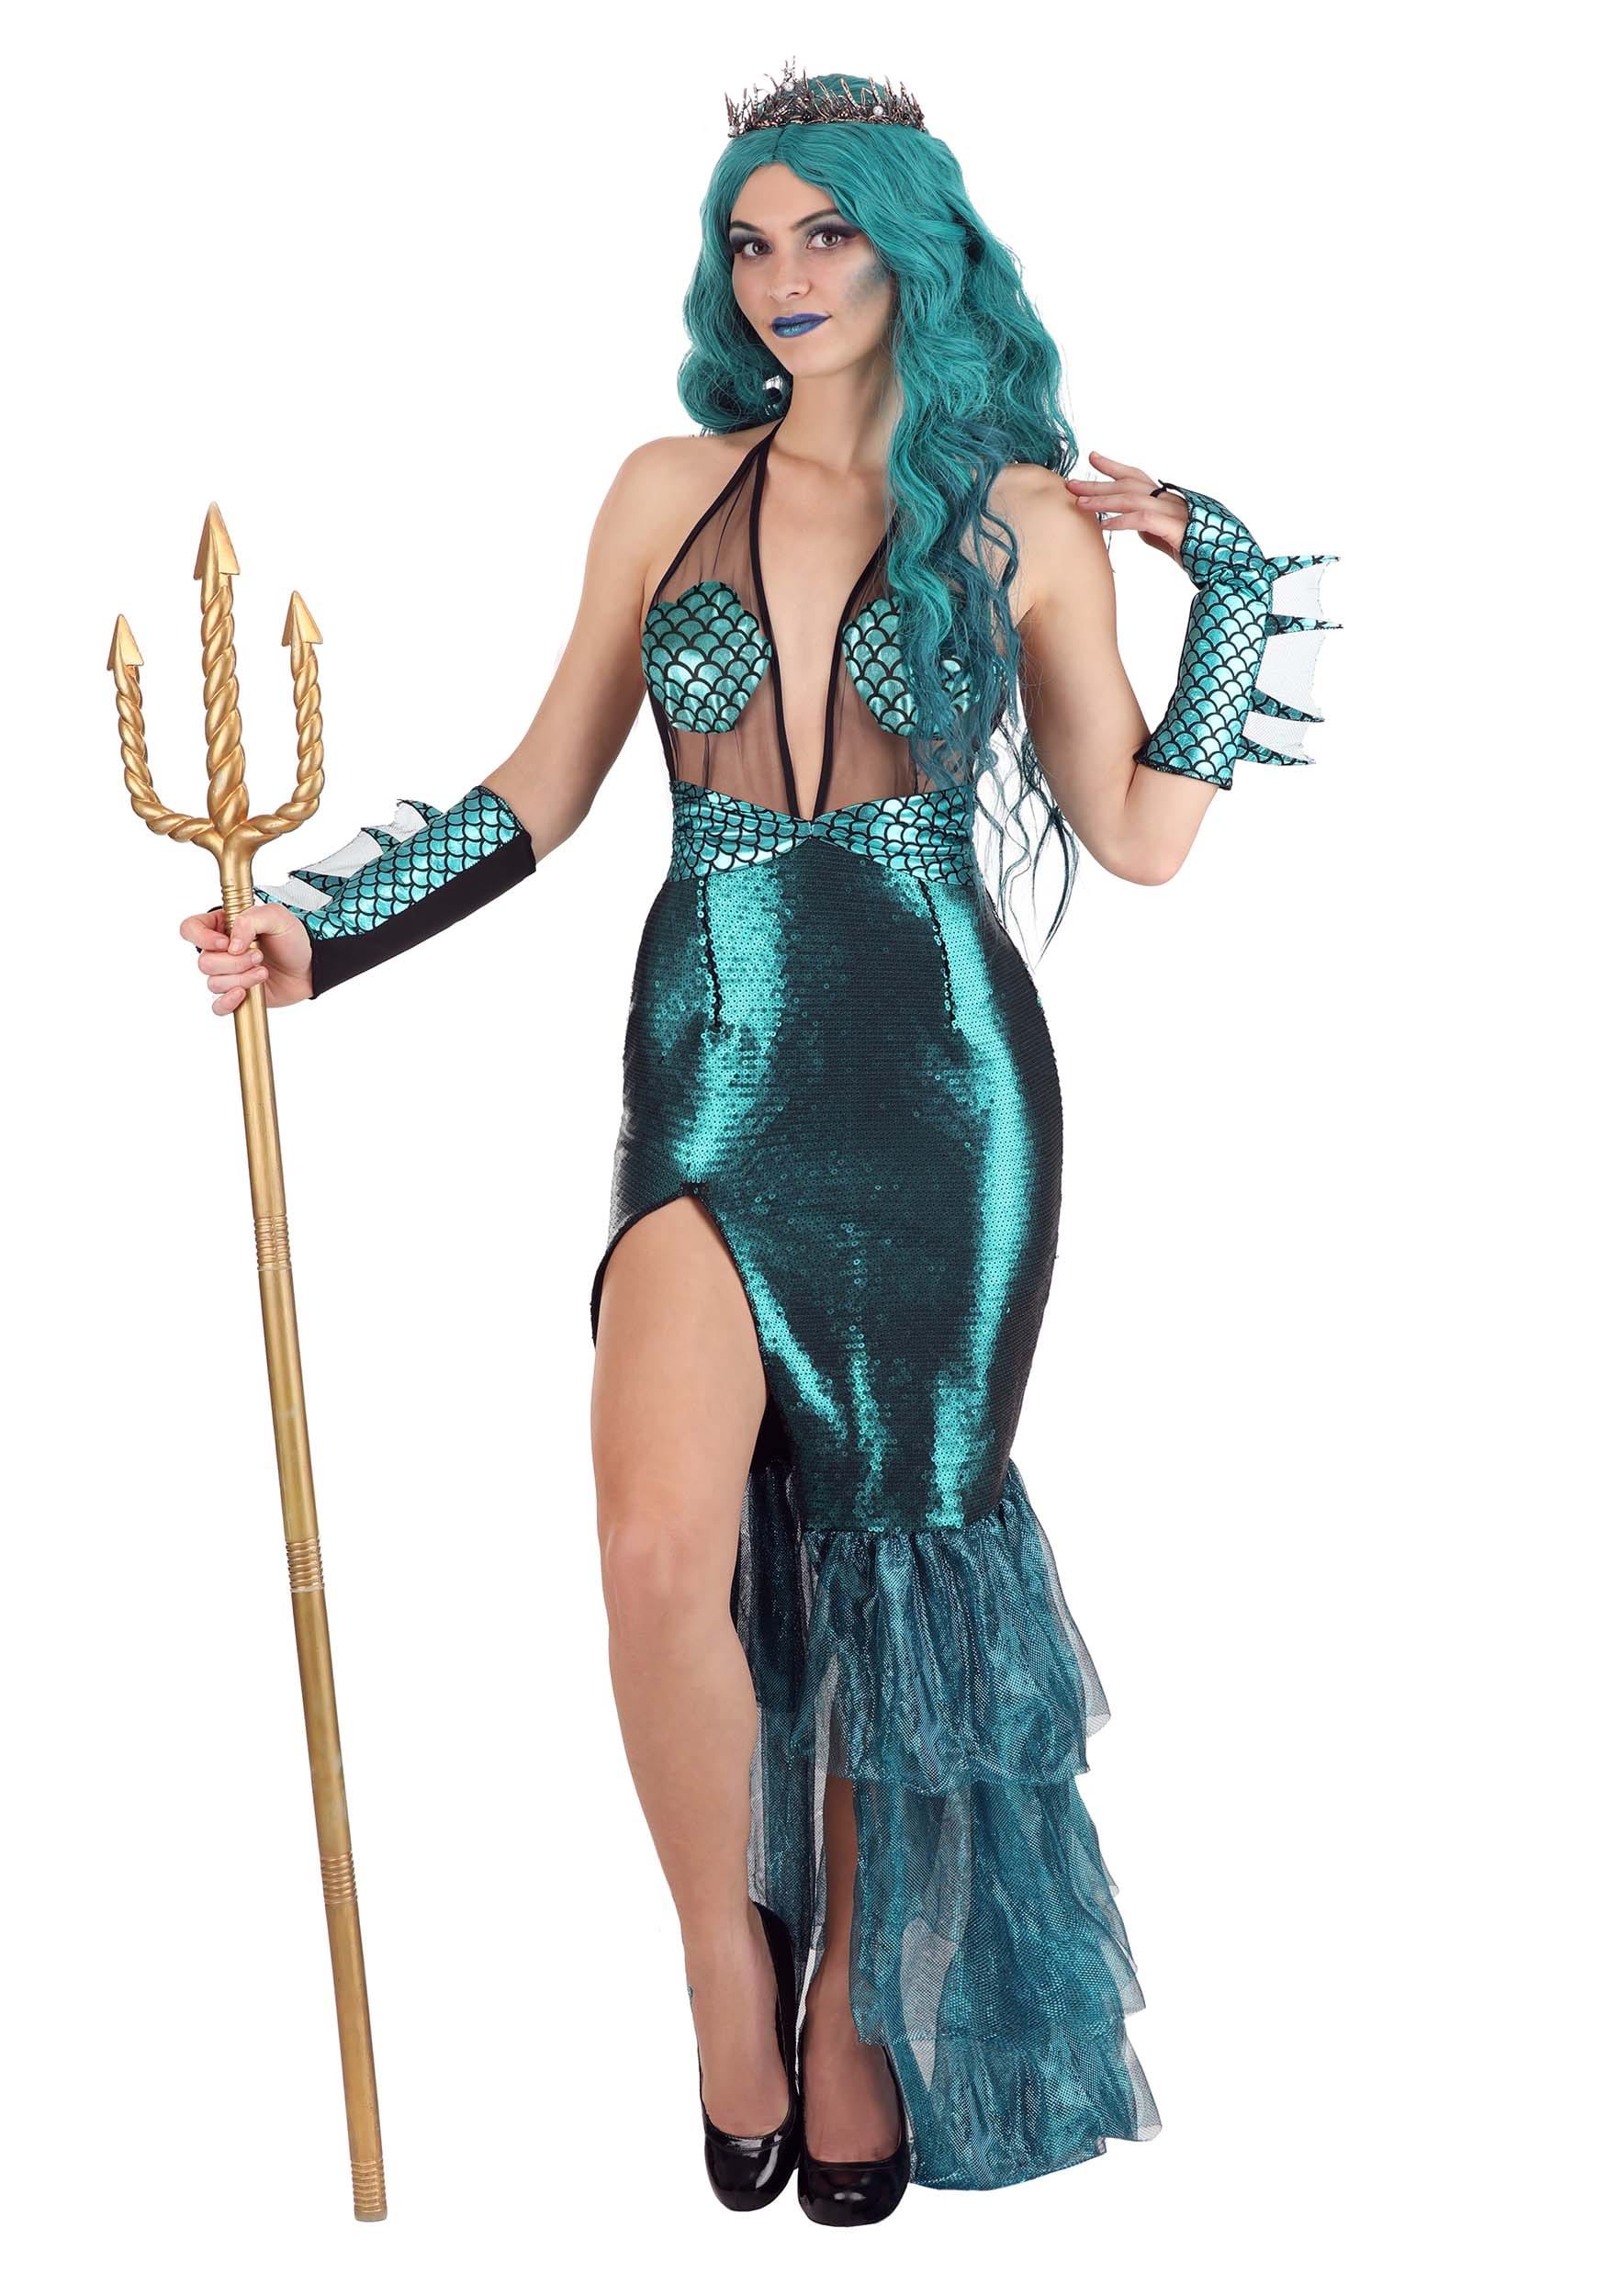 DIY Mermaid Costume – wild beautiful and free